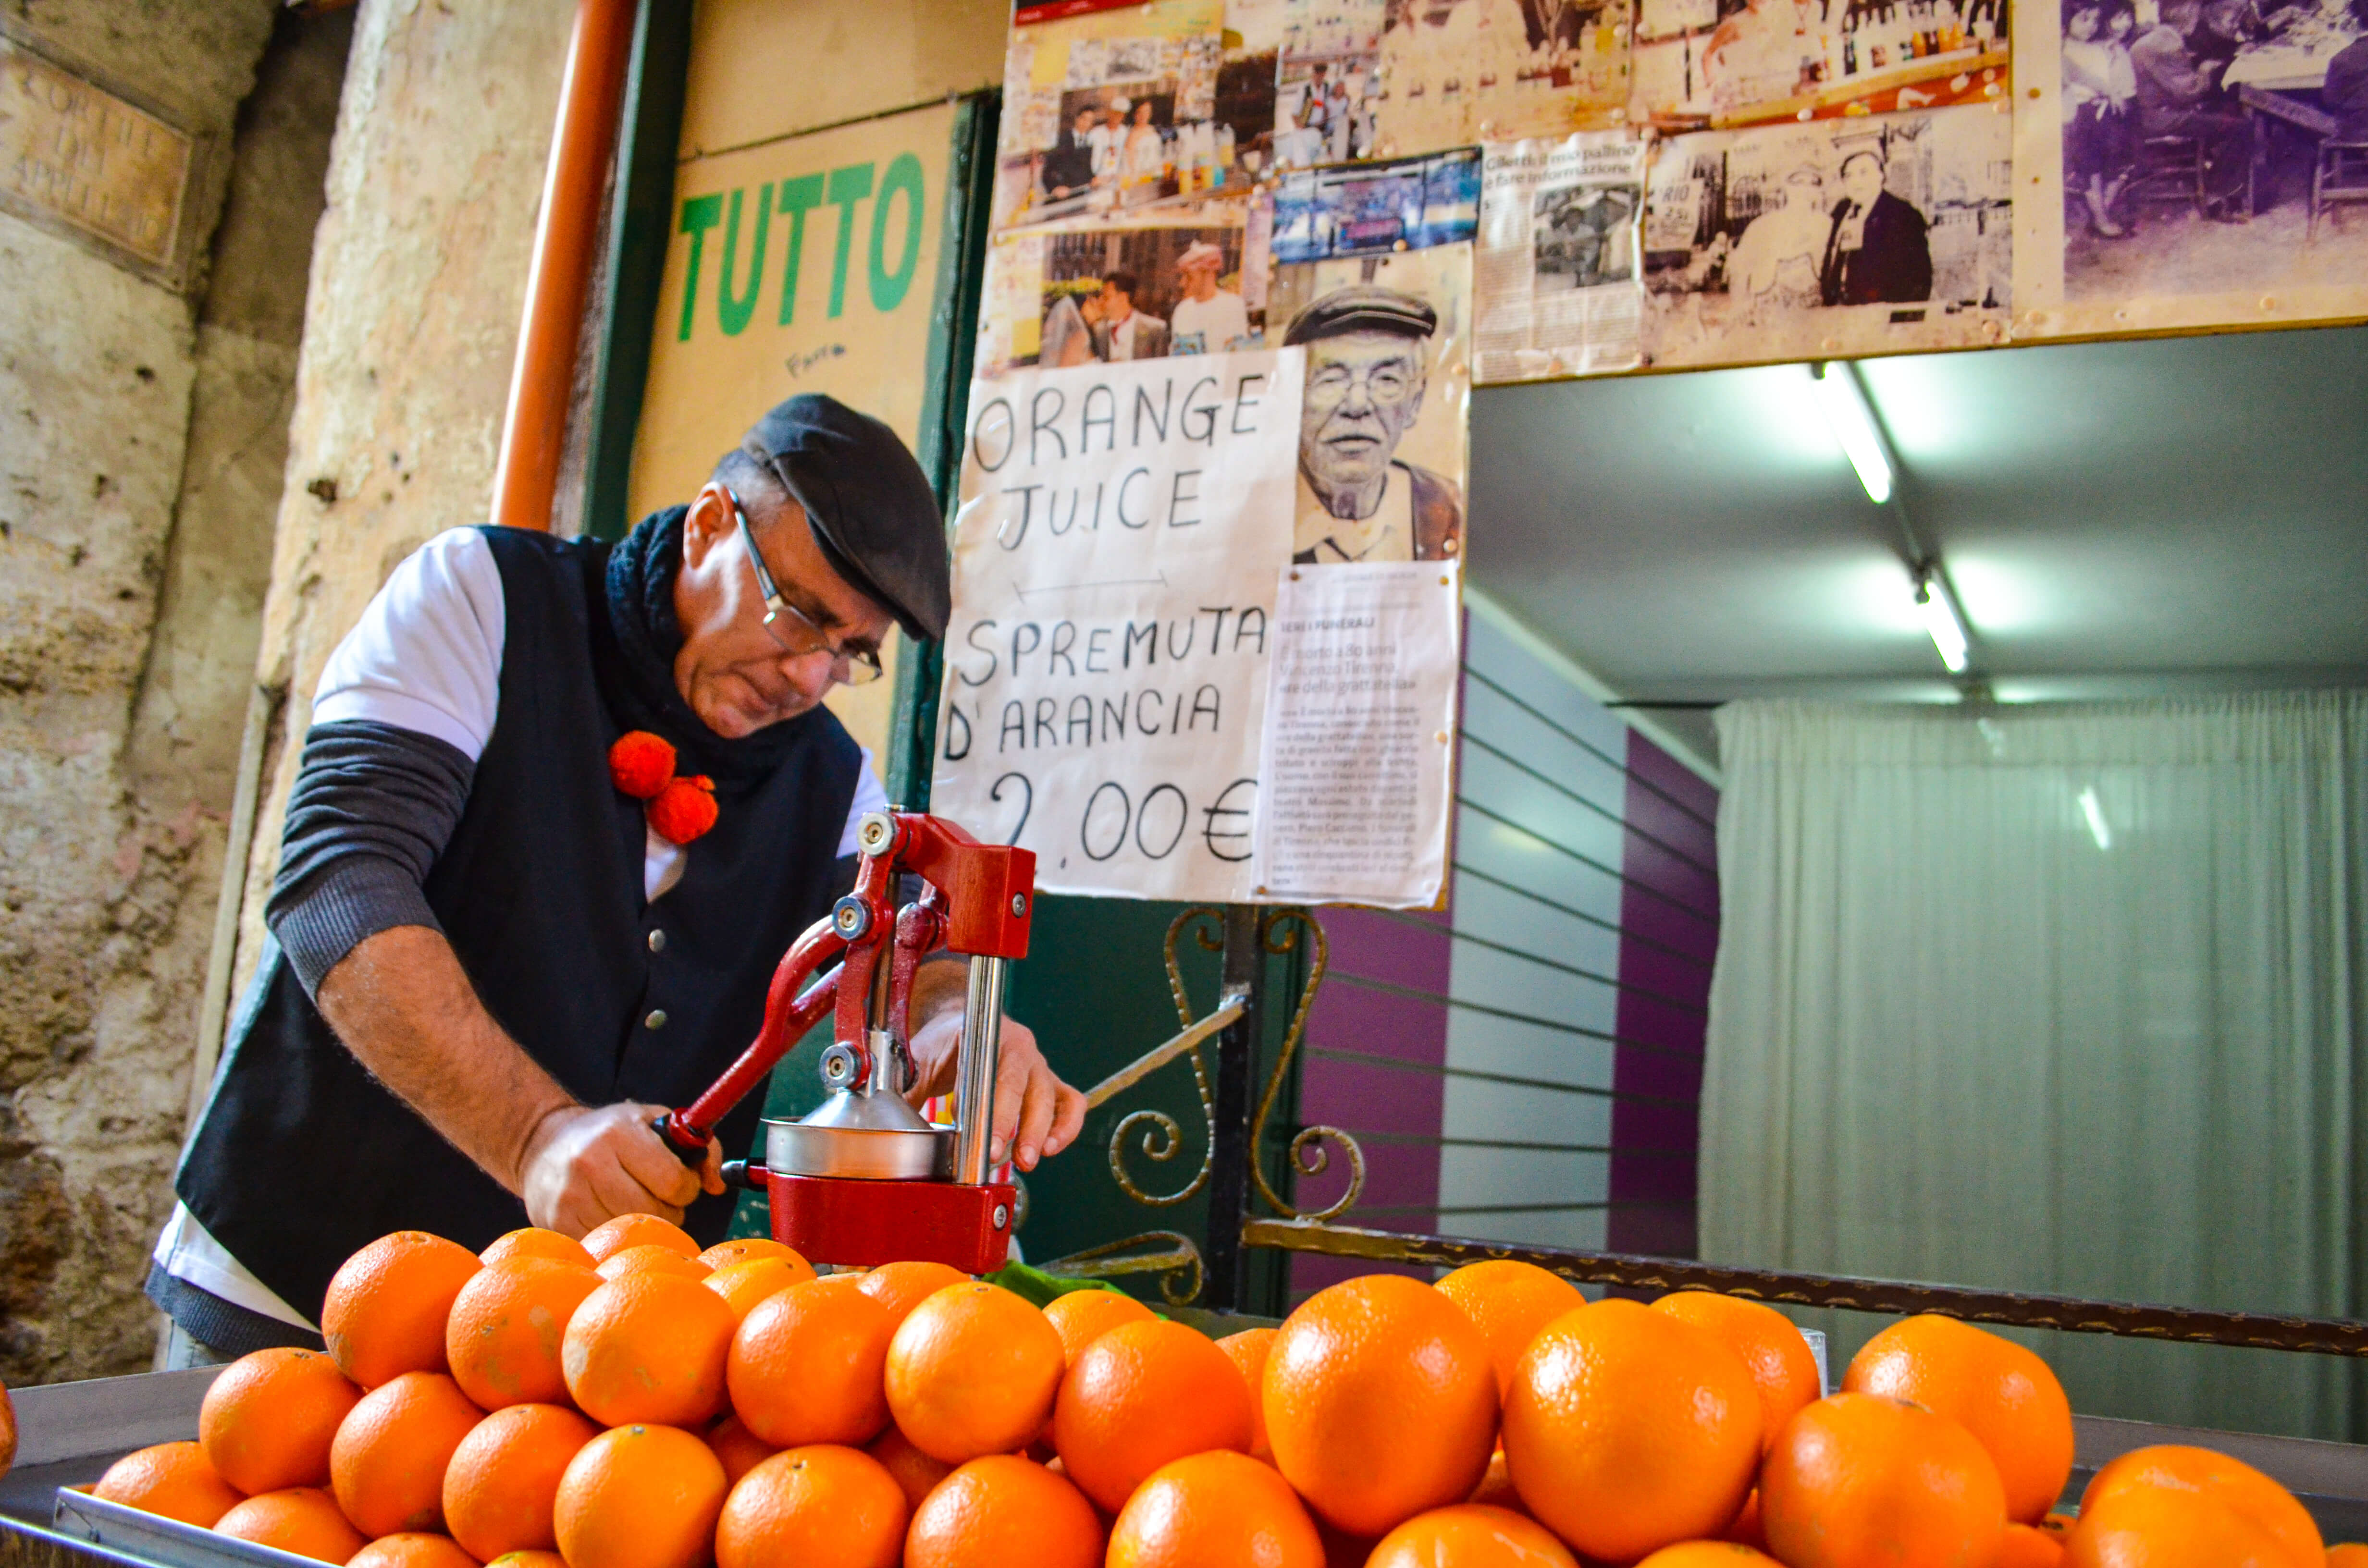 Palermo street food tour with Streaty - Hand pressed orange juice